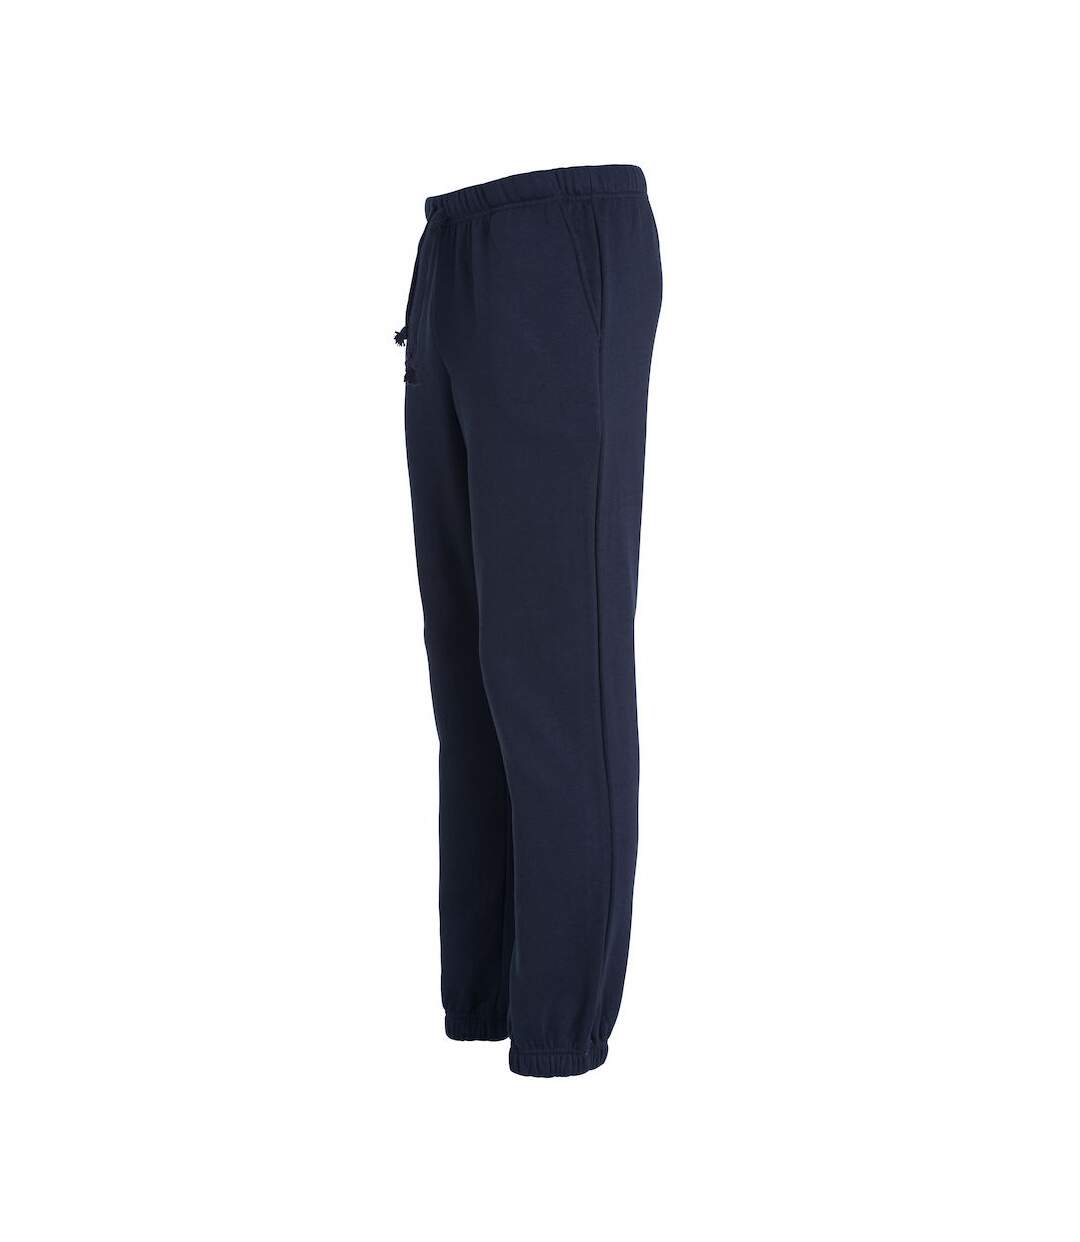 Clique - Pantalon de jogging BASIC - Adulte (Bleu marine foncé) - UTUB824